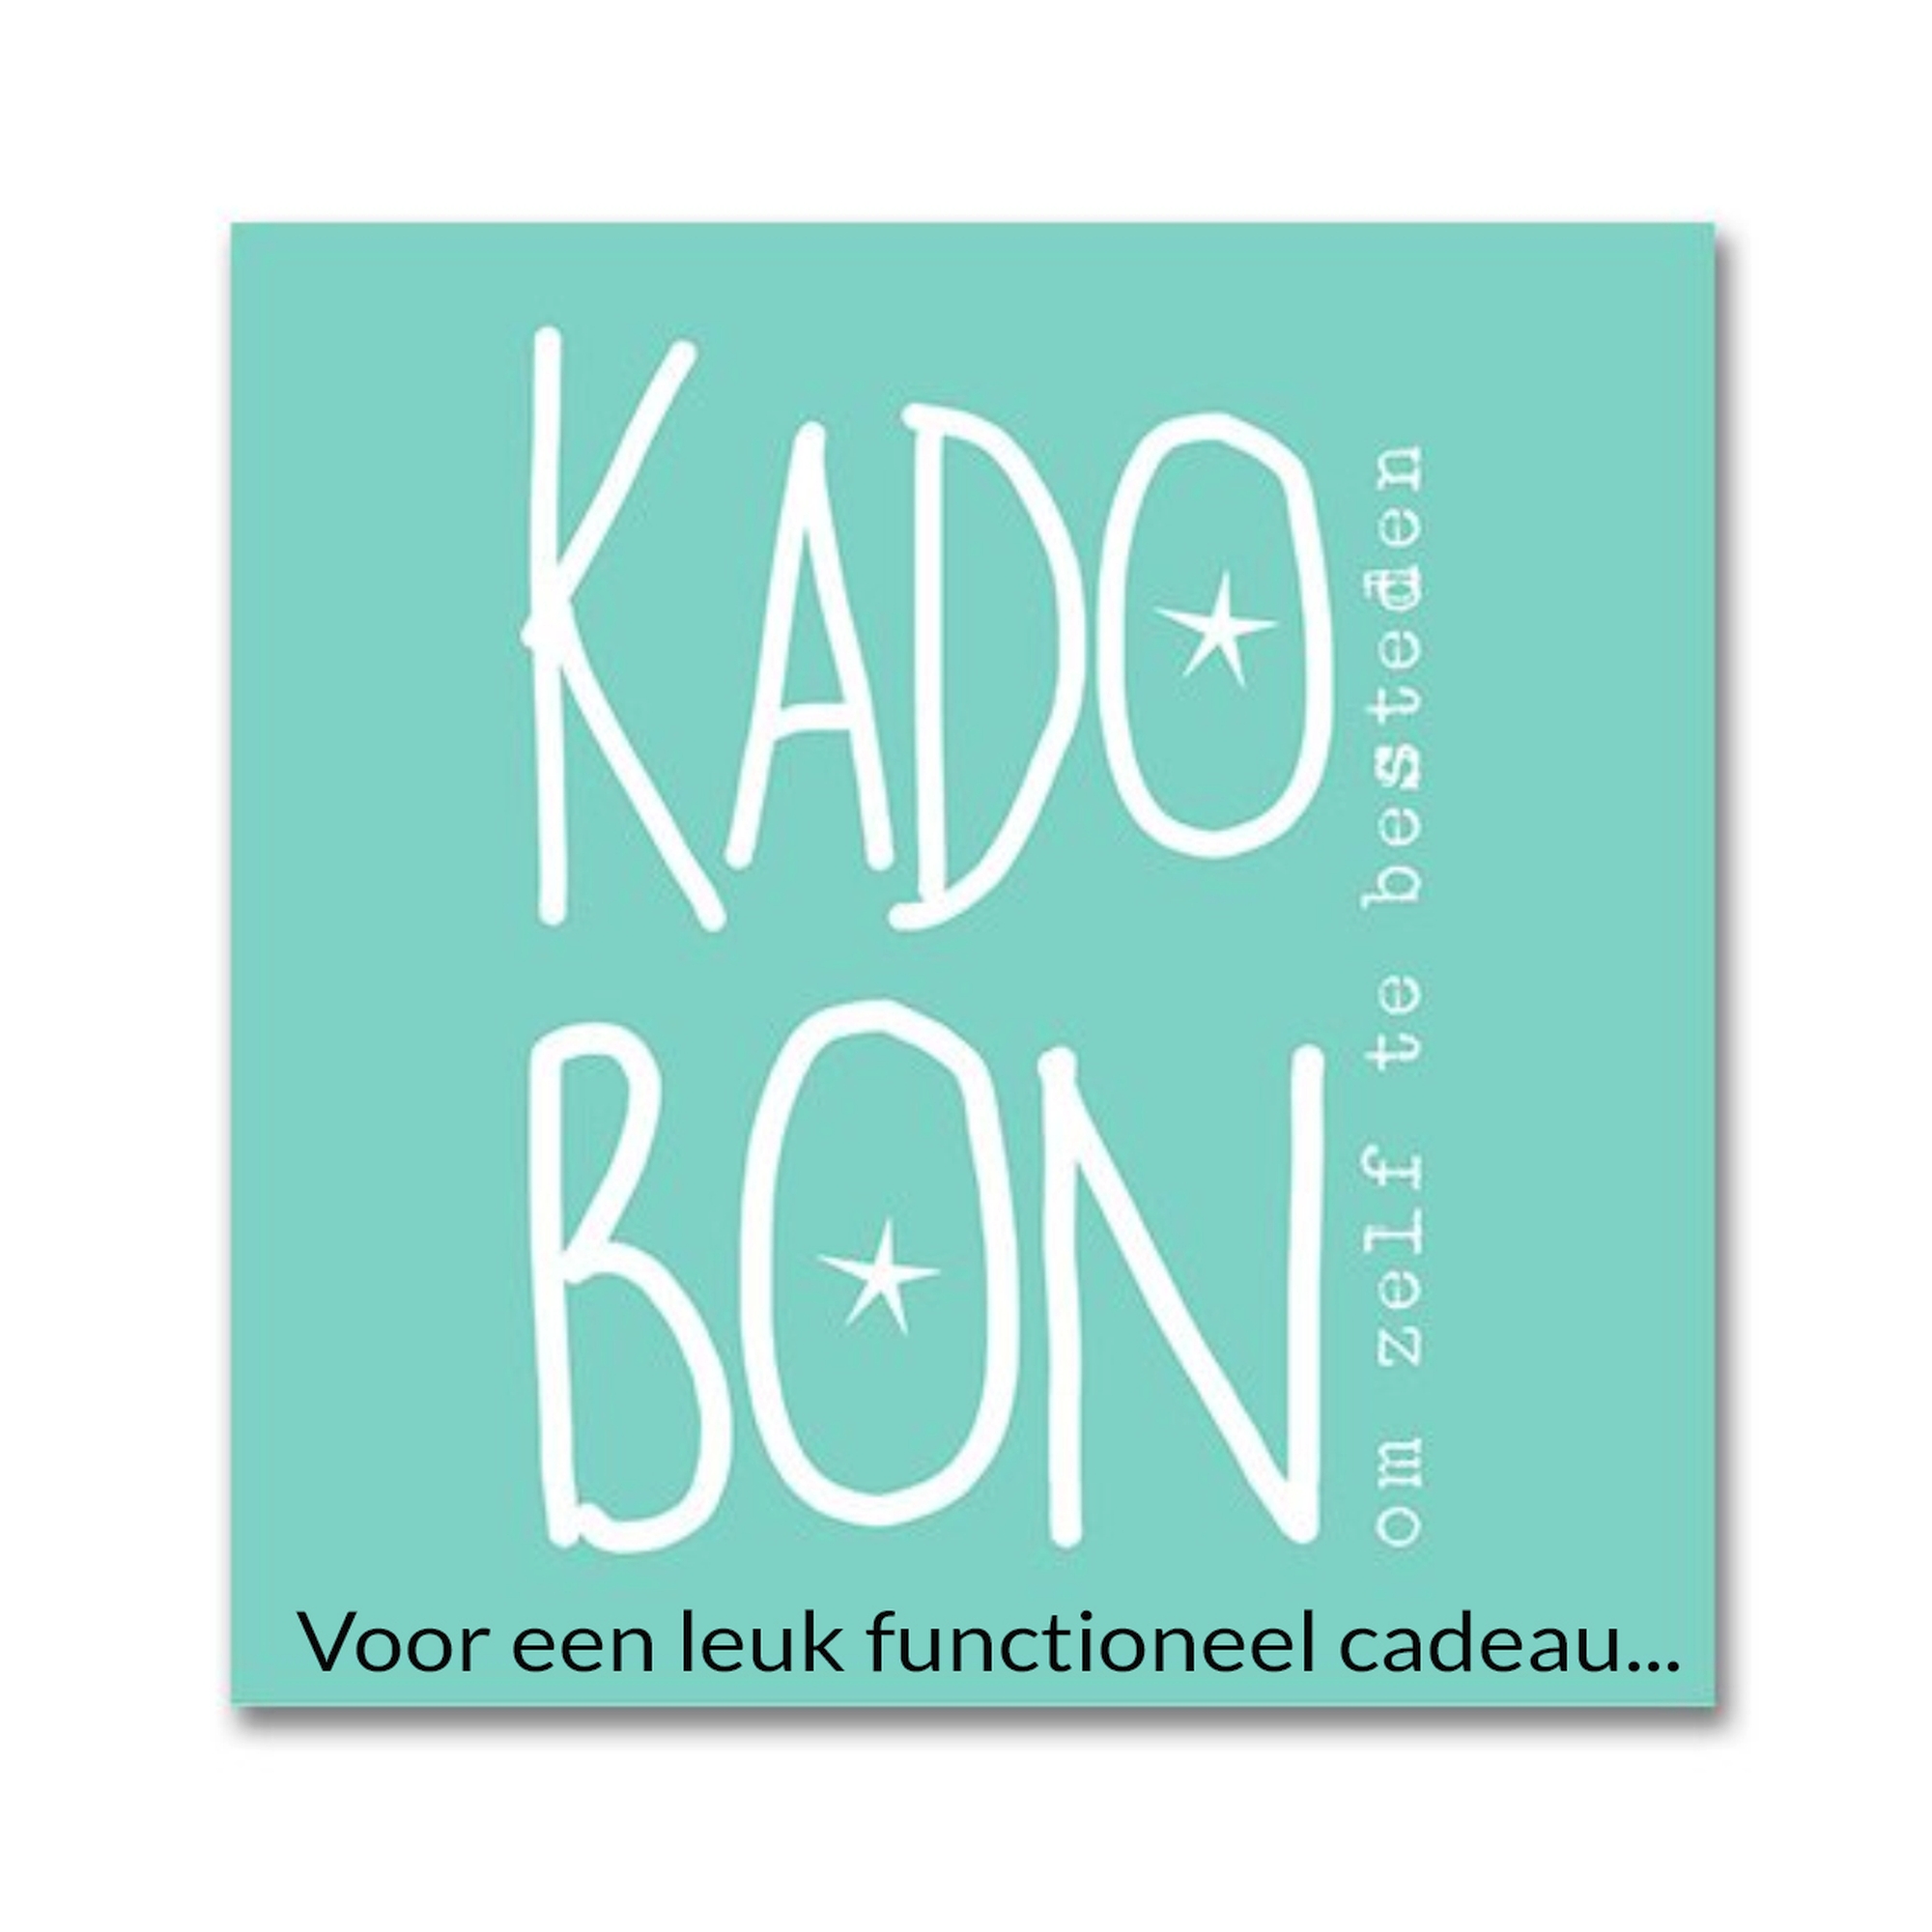 Steenwijk Schoenmode Kadobon Eur 100,00